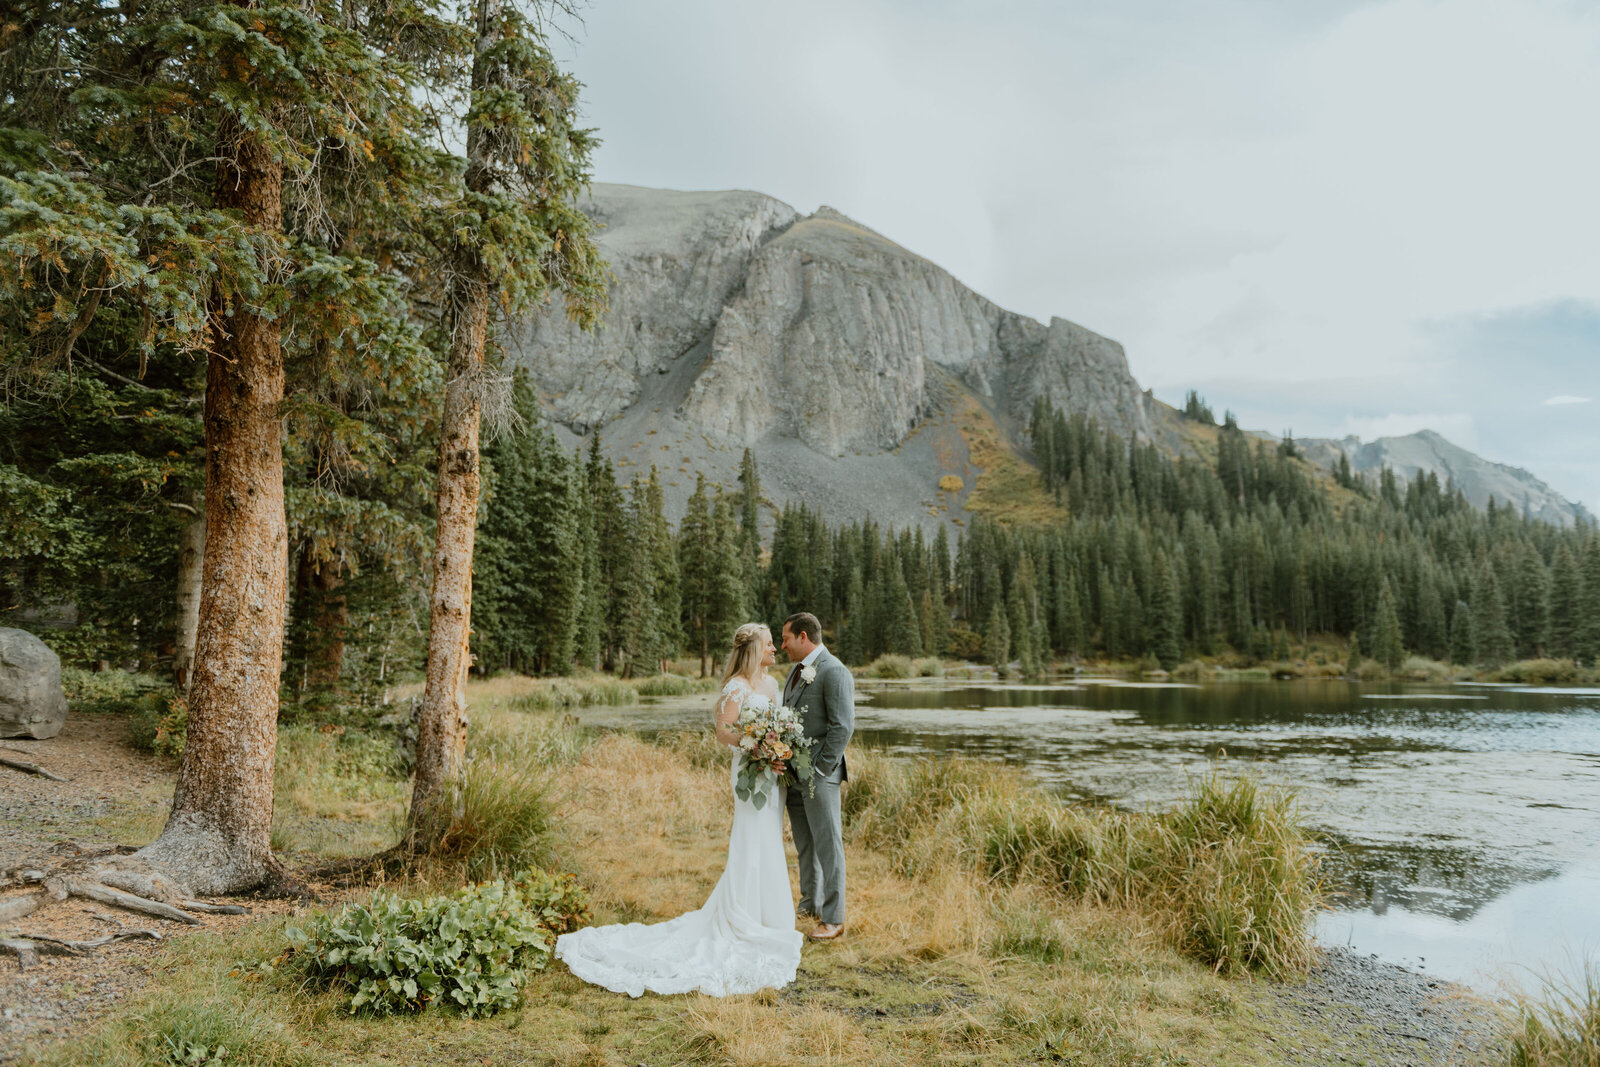 How to elope in Telluride, Colorado